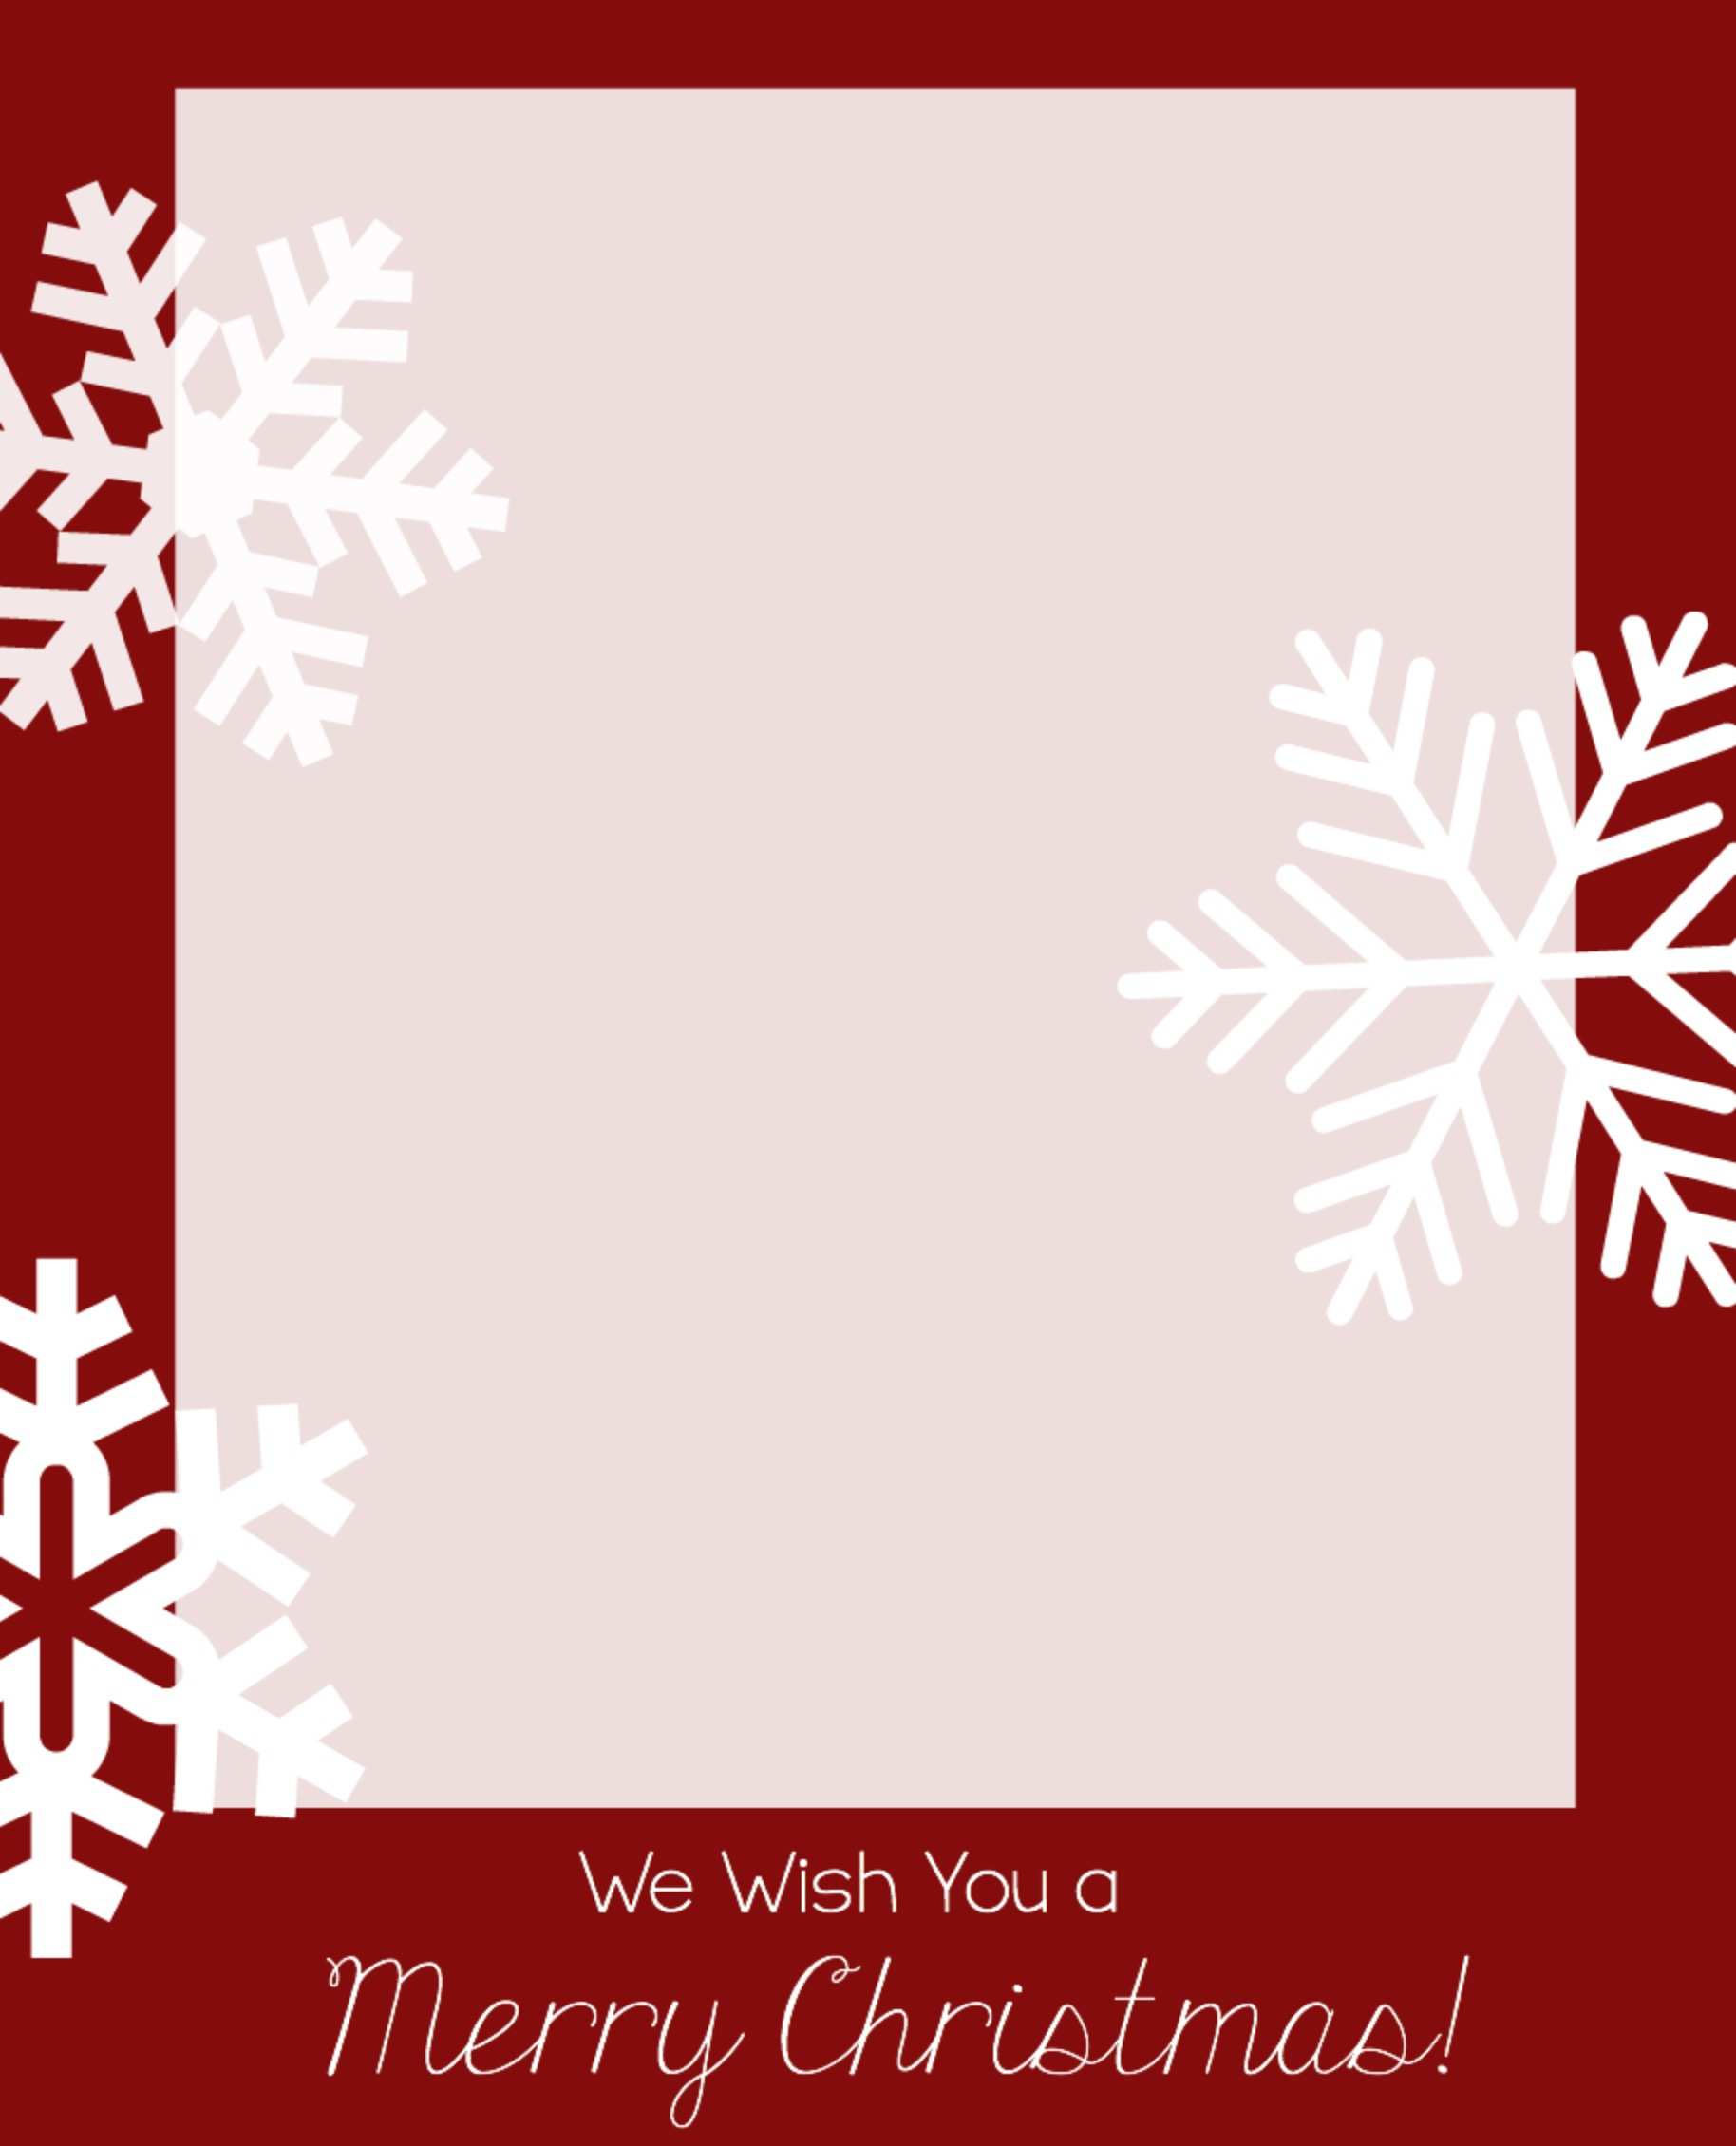 97 Adding Christmas Card Templates Images Formating with Christmas Card Templates Images